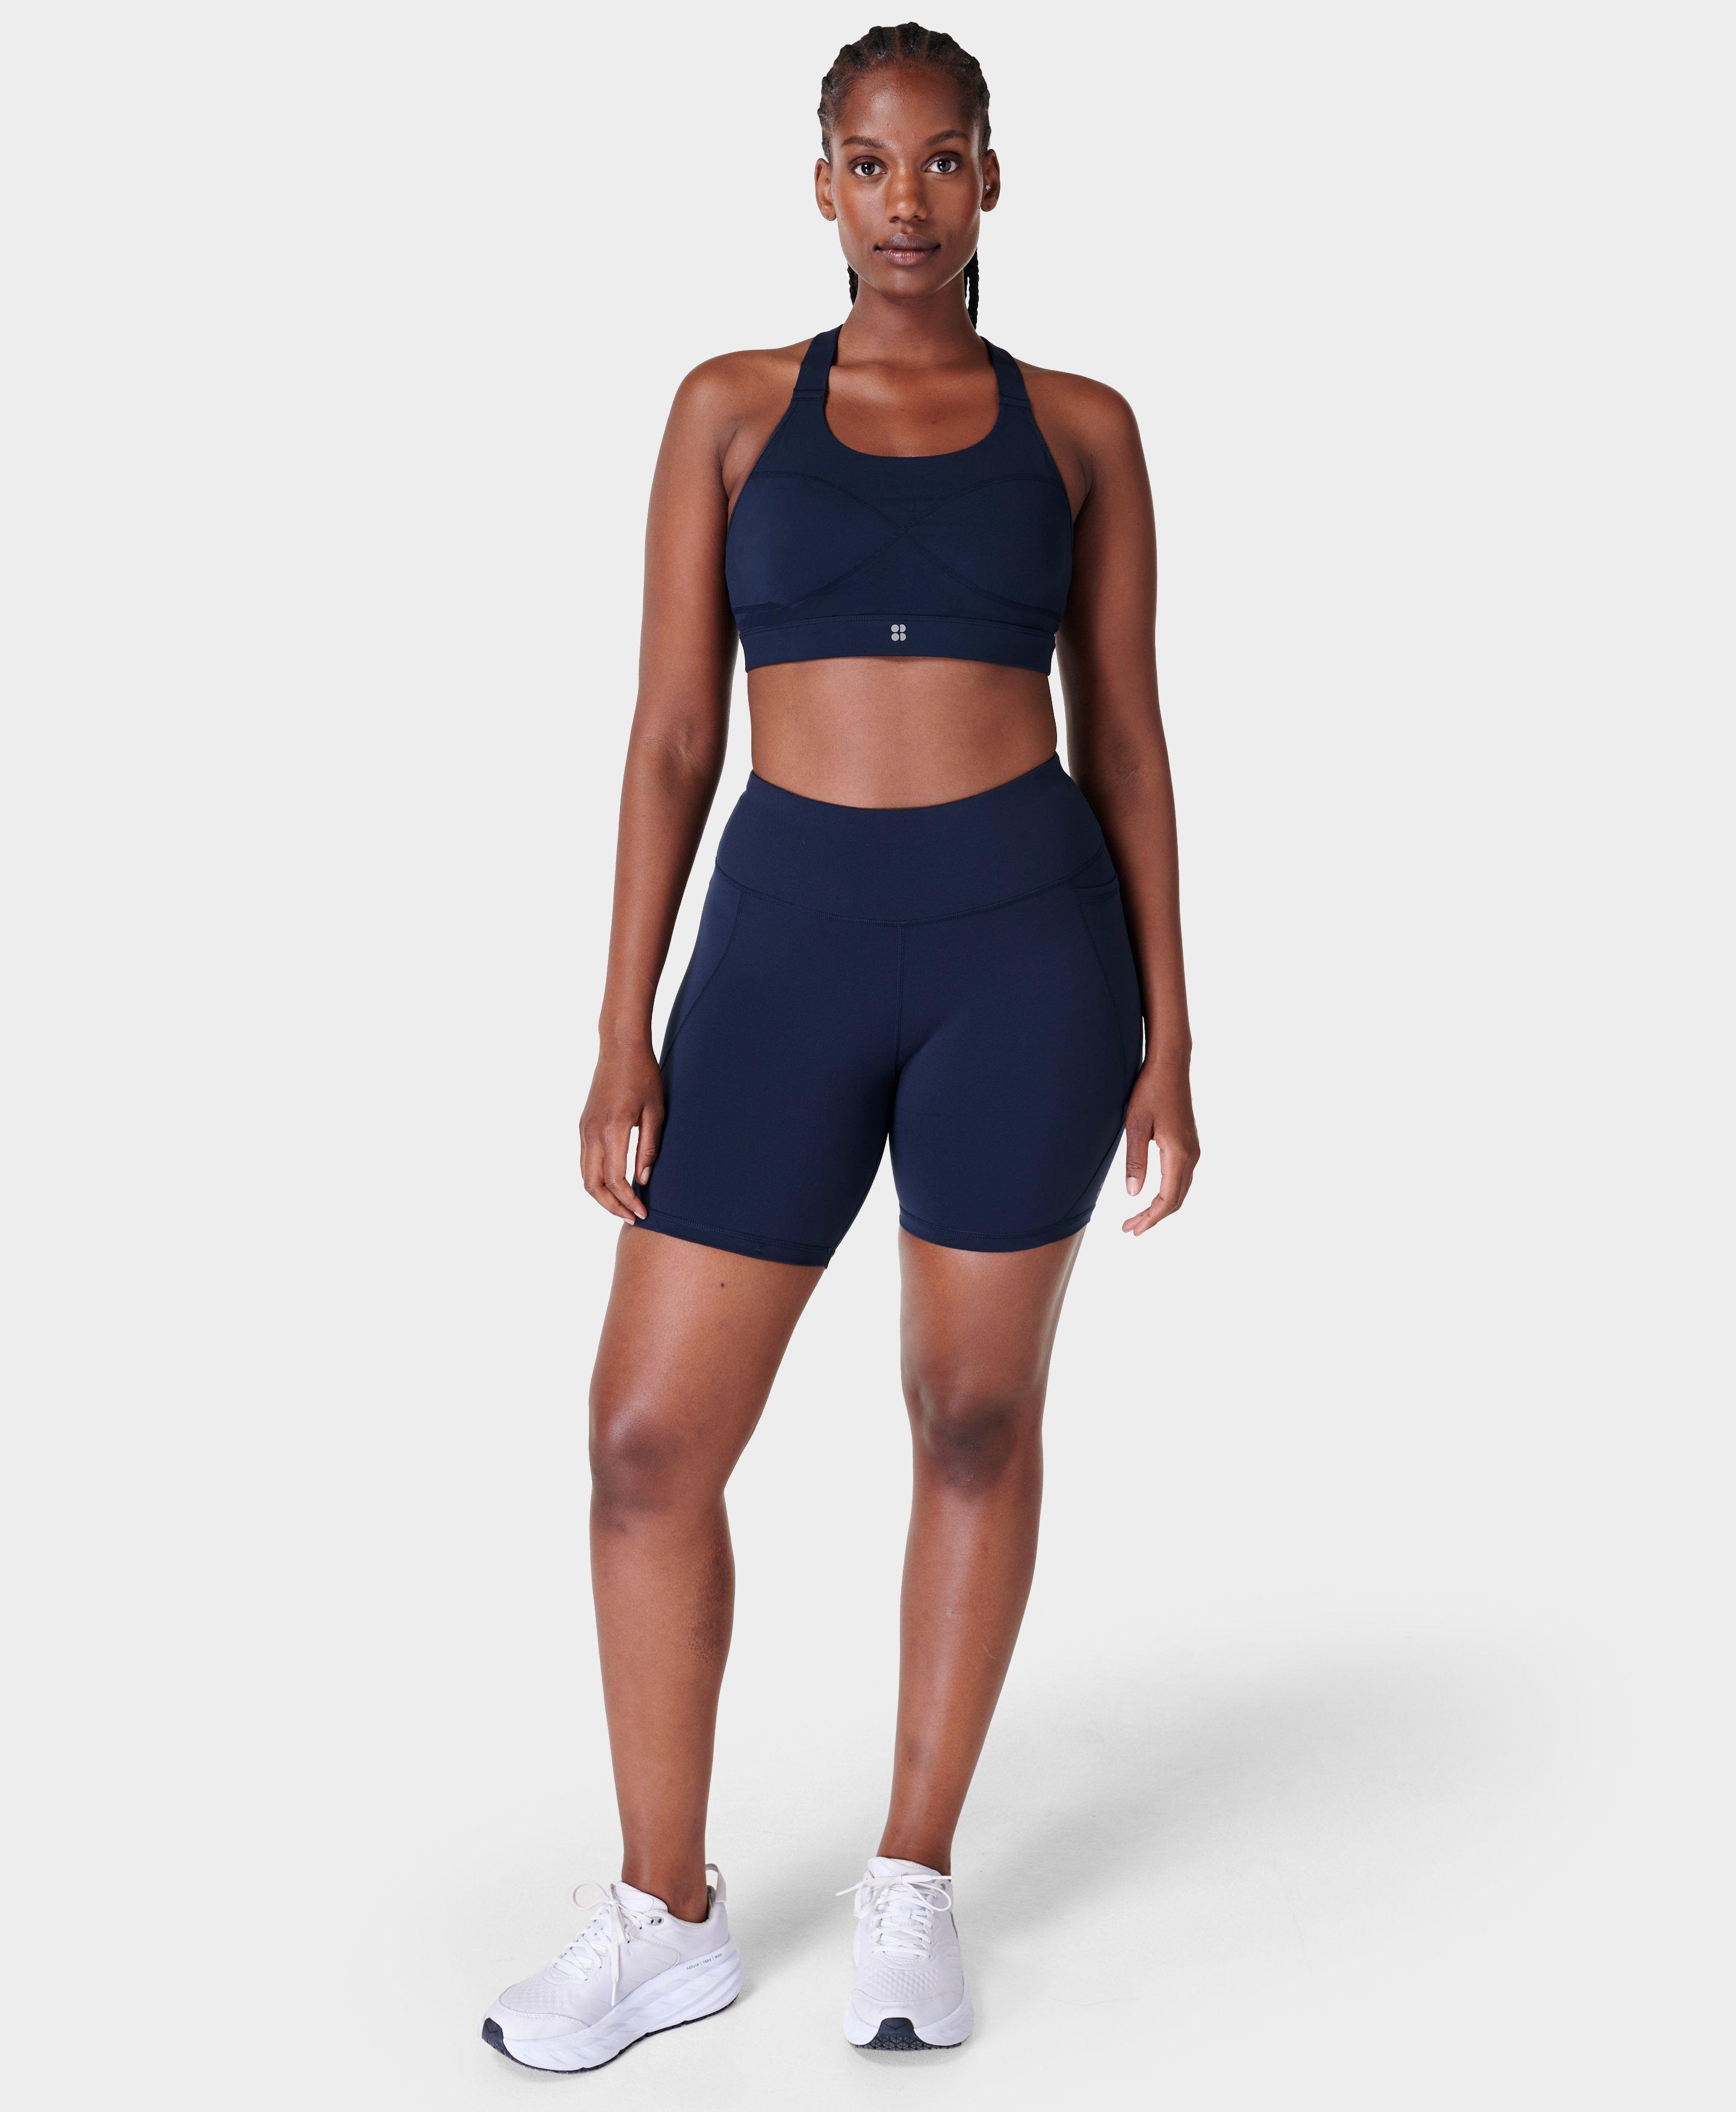 Power 6 Cycling Shorts - Navy Blue, Women's Shorts + Skorts